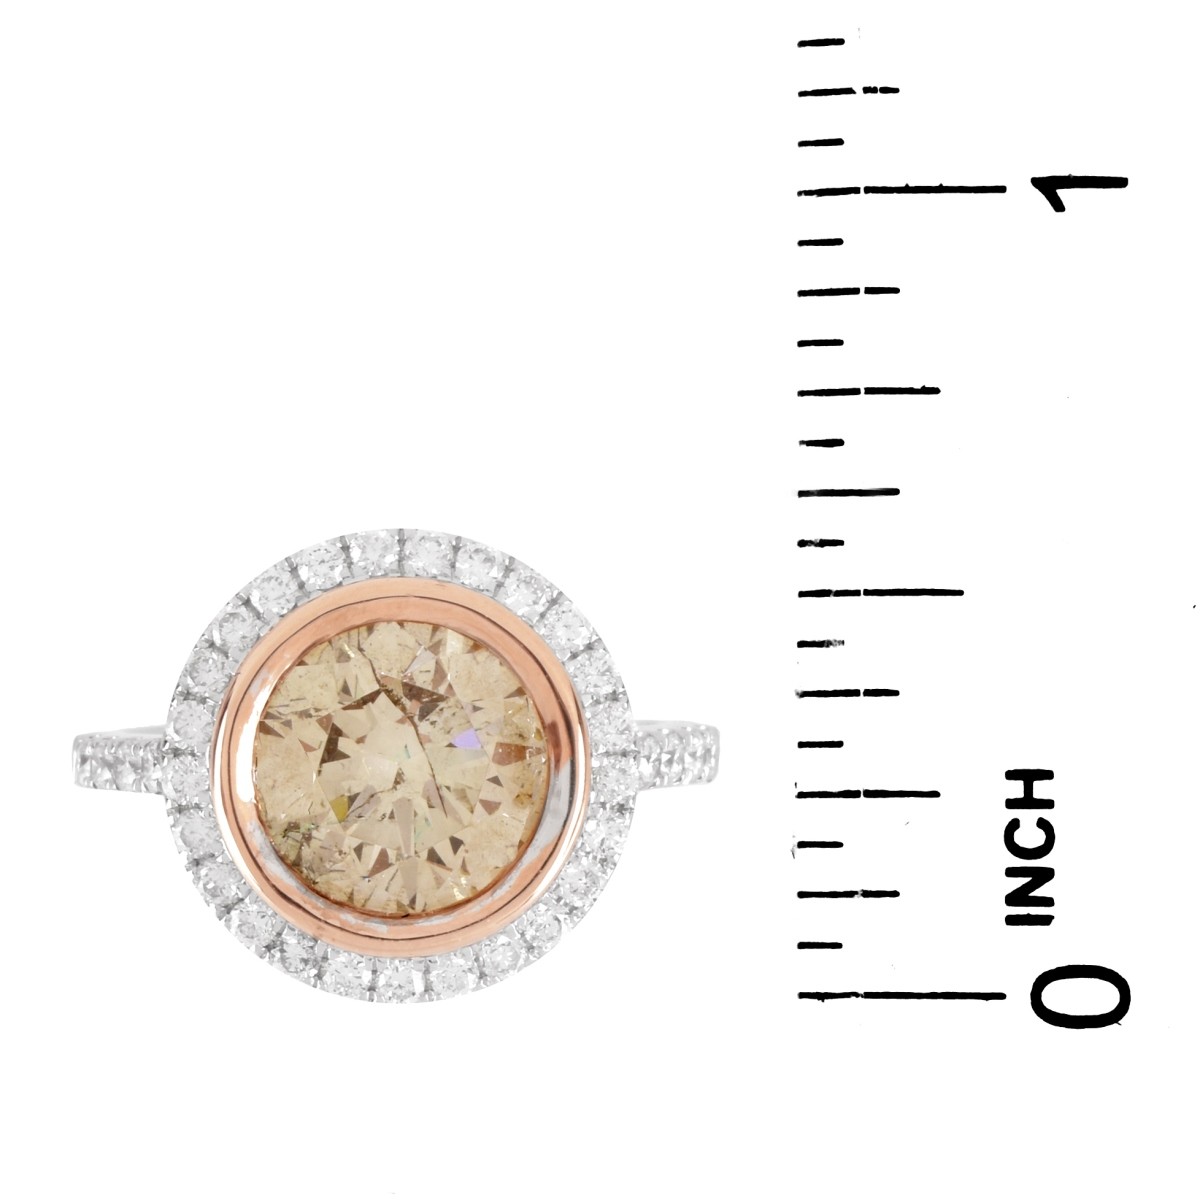 3.02ct Fancy Pinkish Brown Diamond Ring